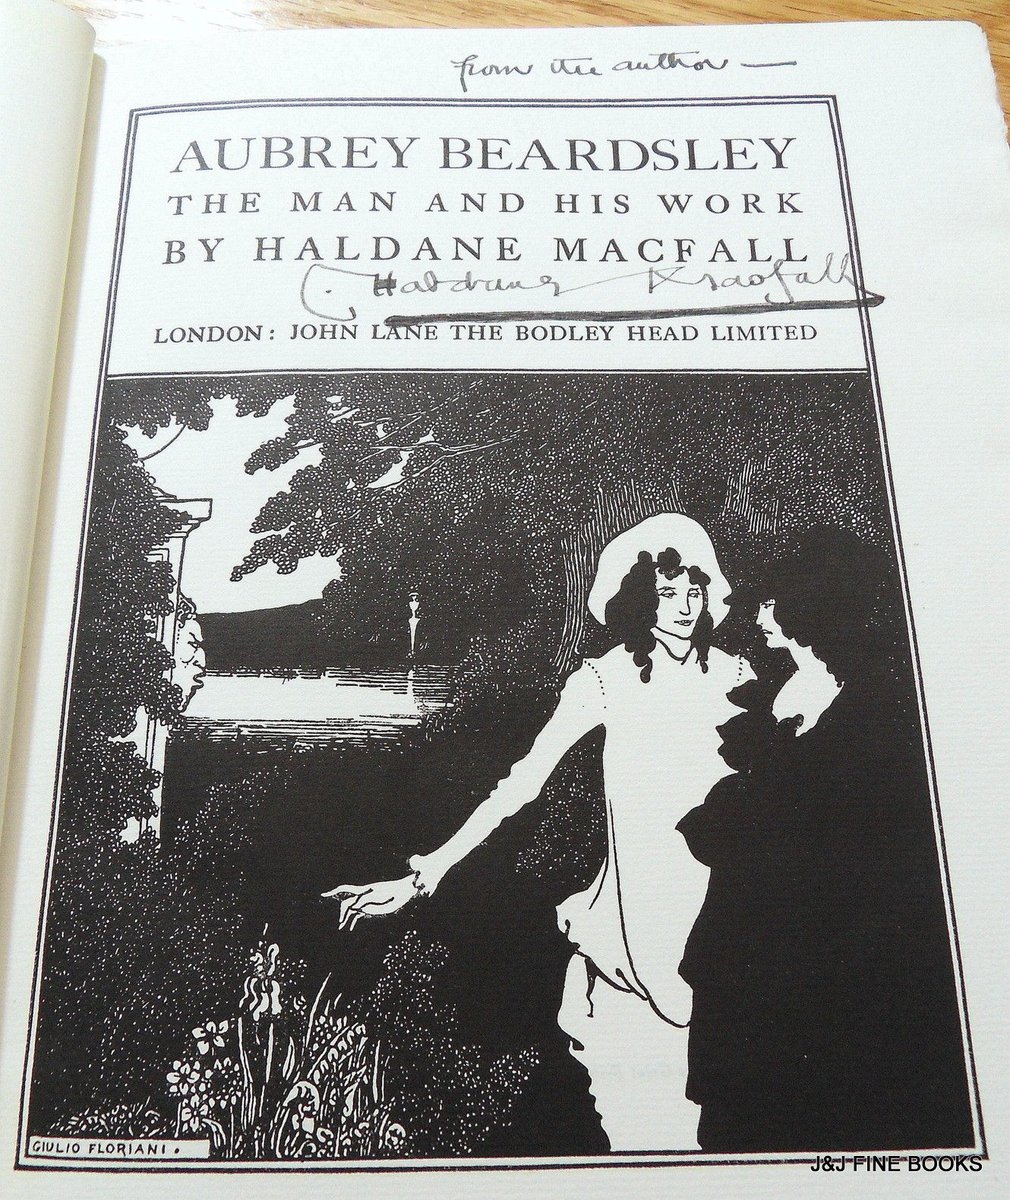 '#AubreyBeardsley: The Man and His Work' signed by author #HaldaneMacfall, 1928.